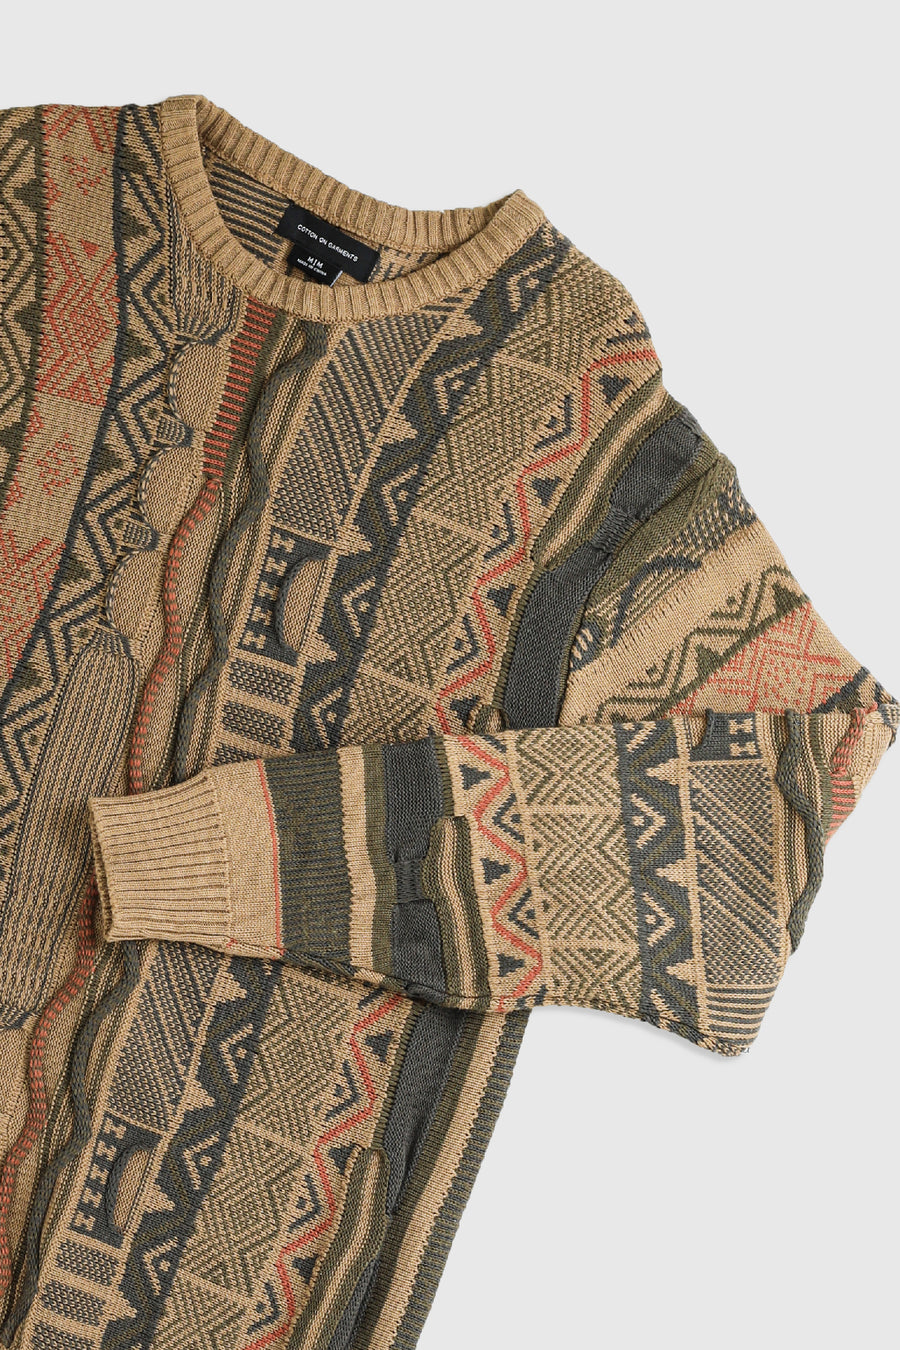 Coogi Style Knit Sweater